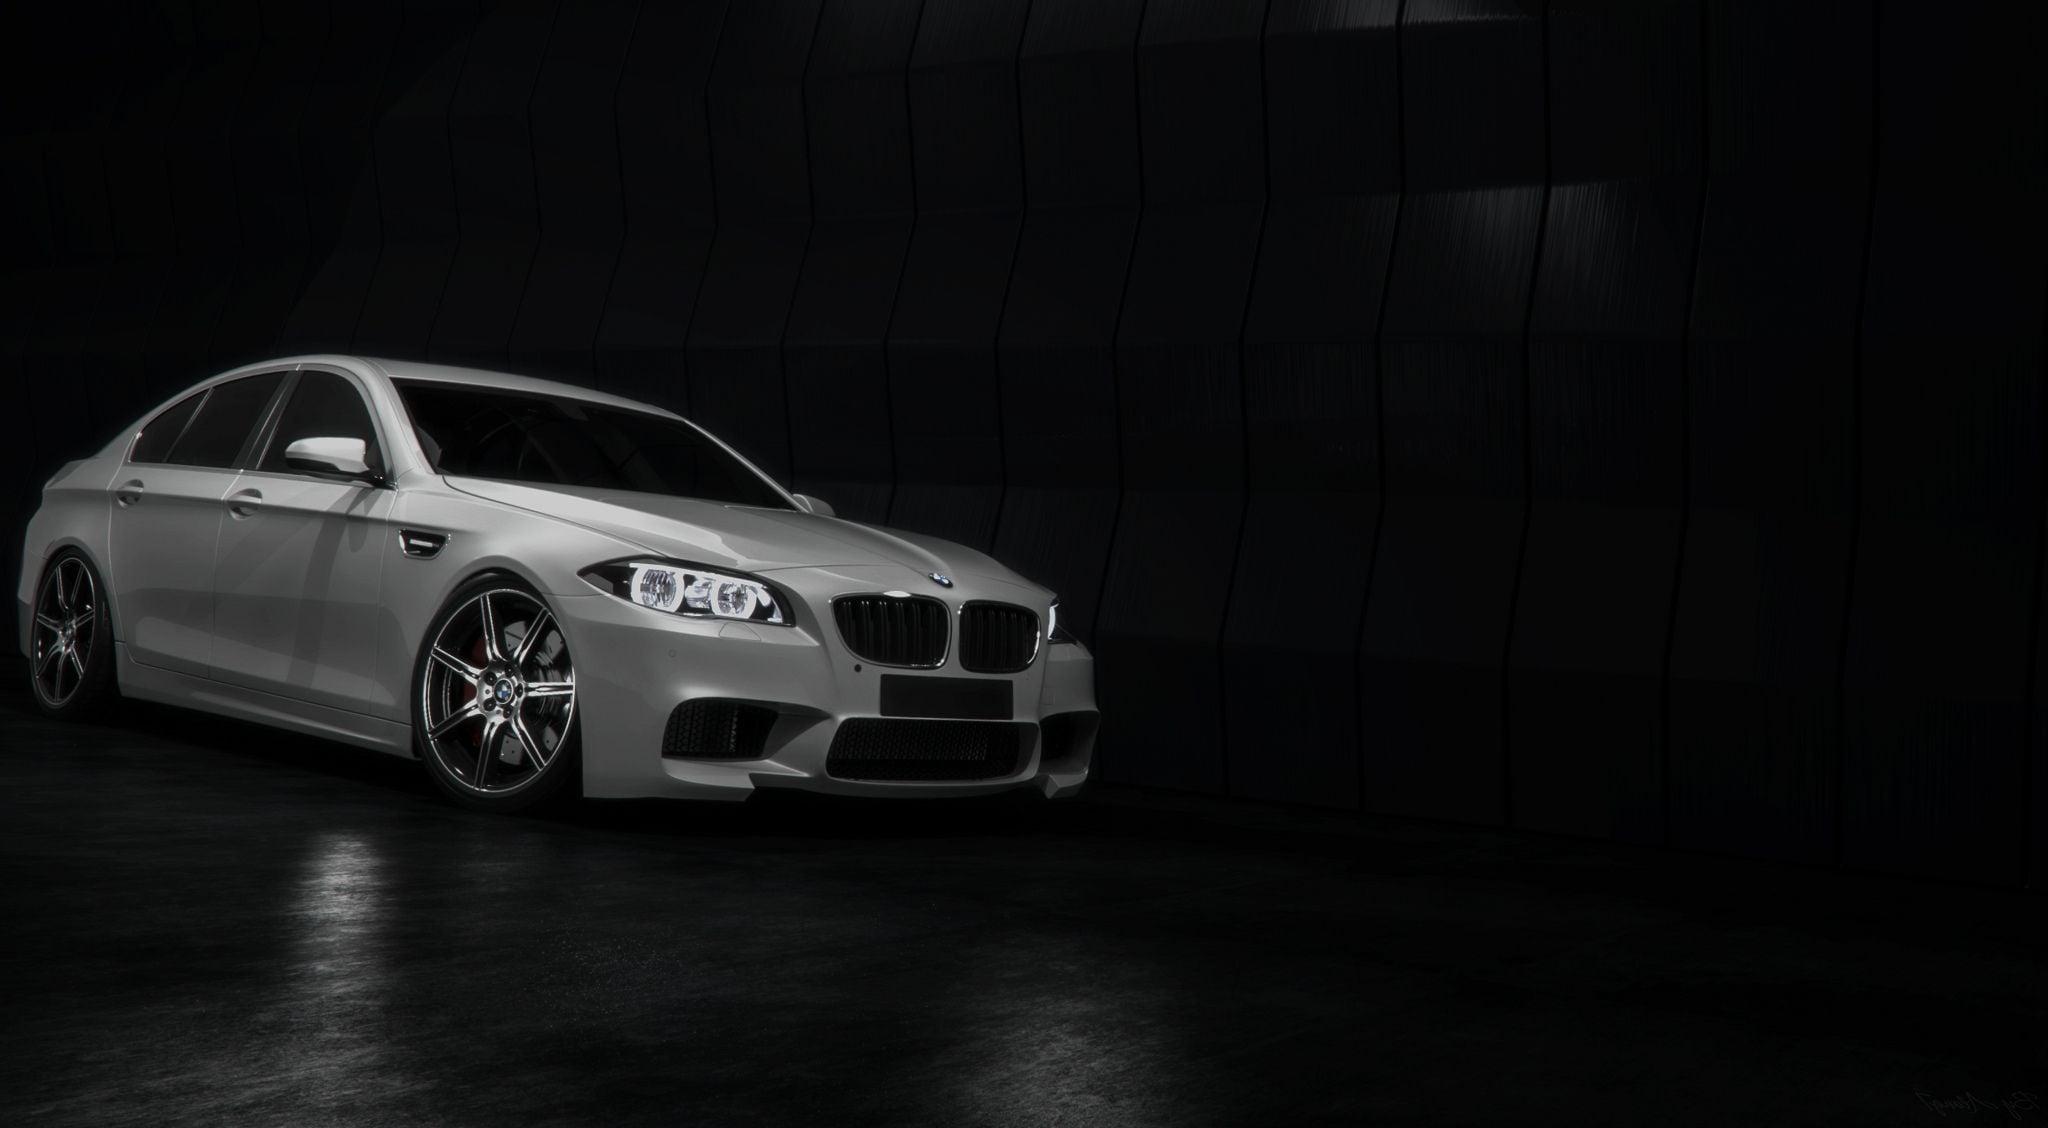 BMW M5 F10 wallpaper HD High Quality Download